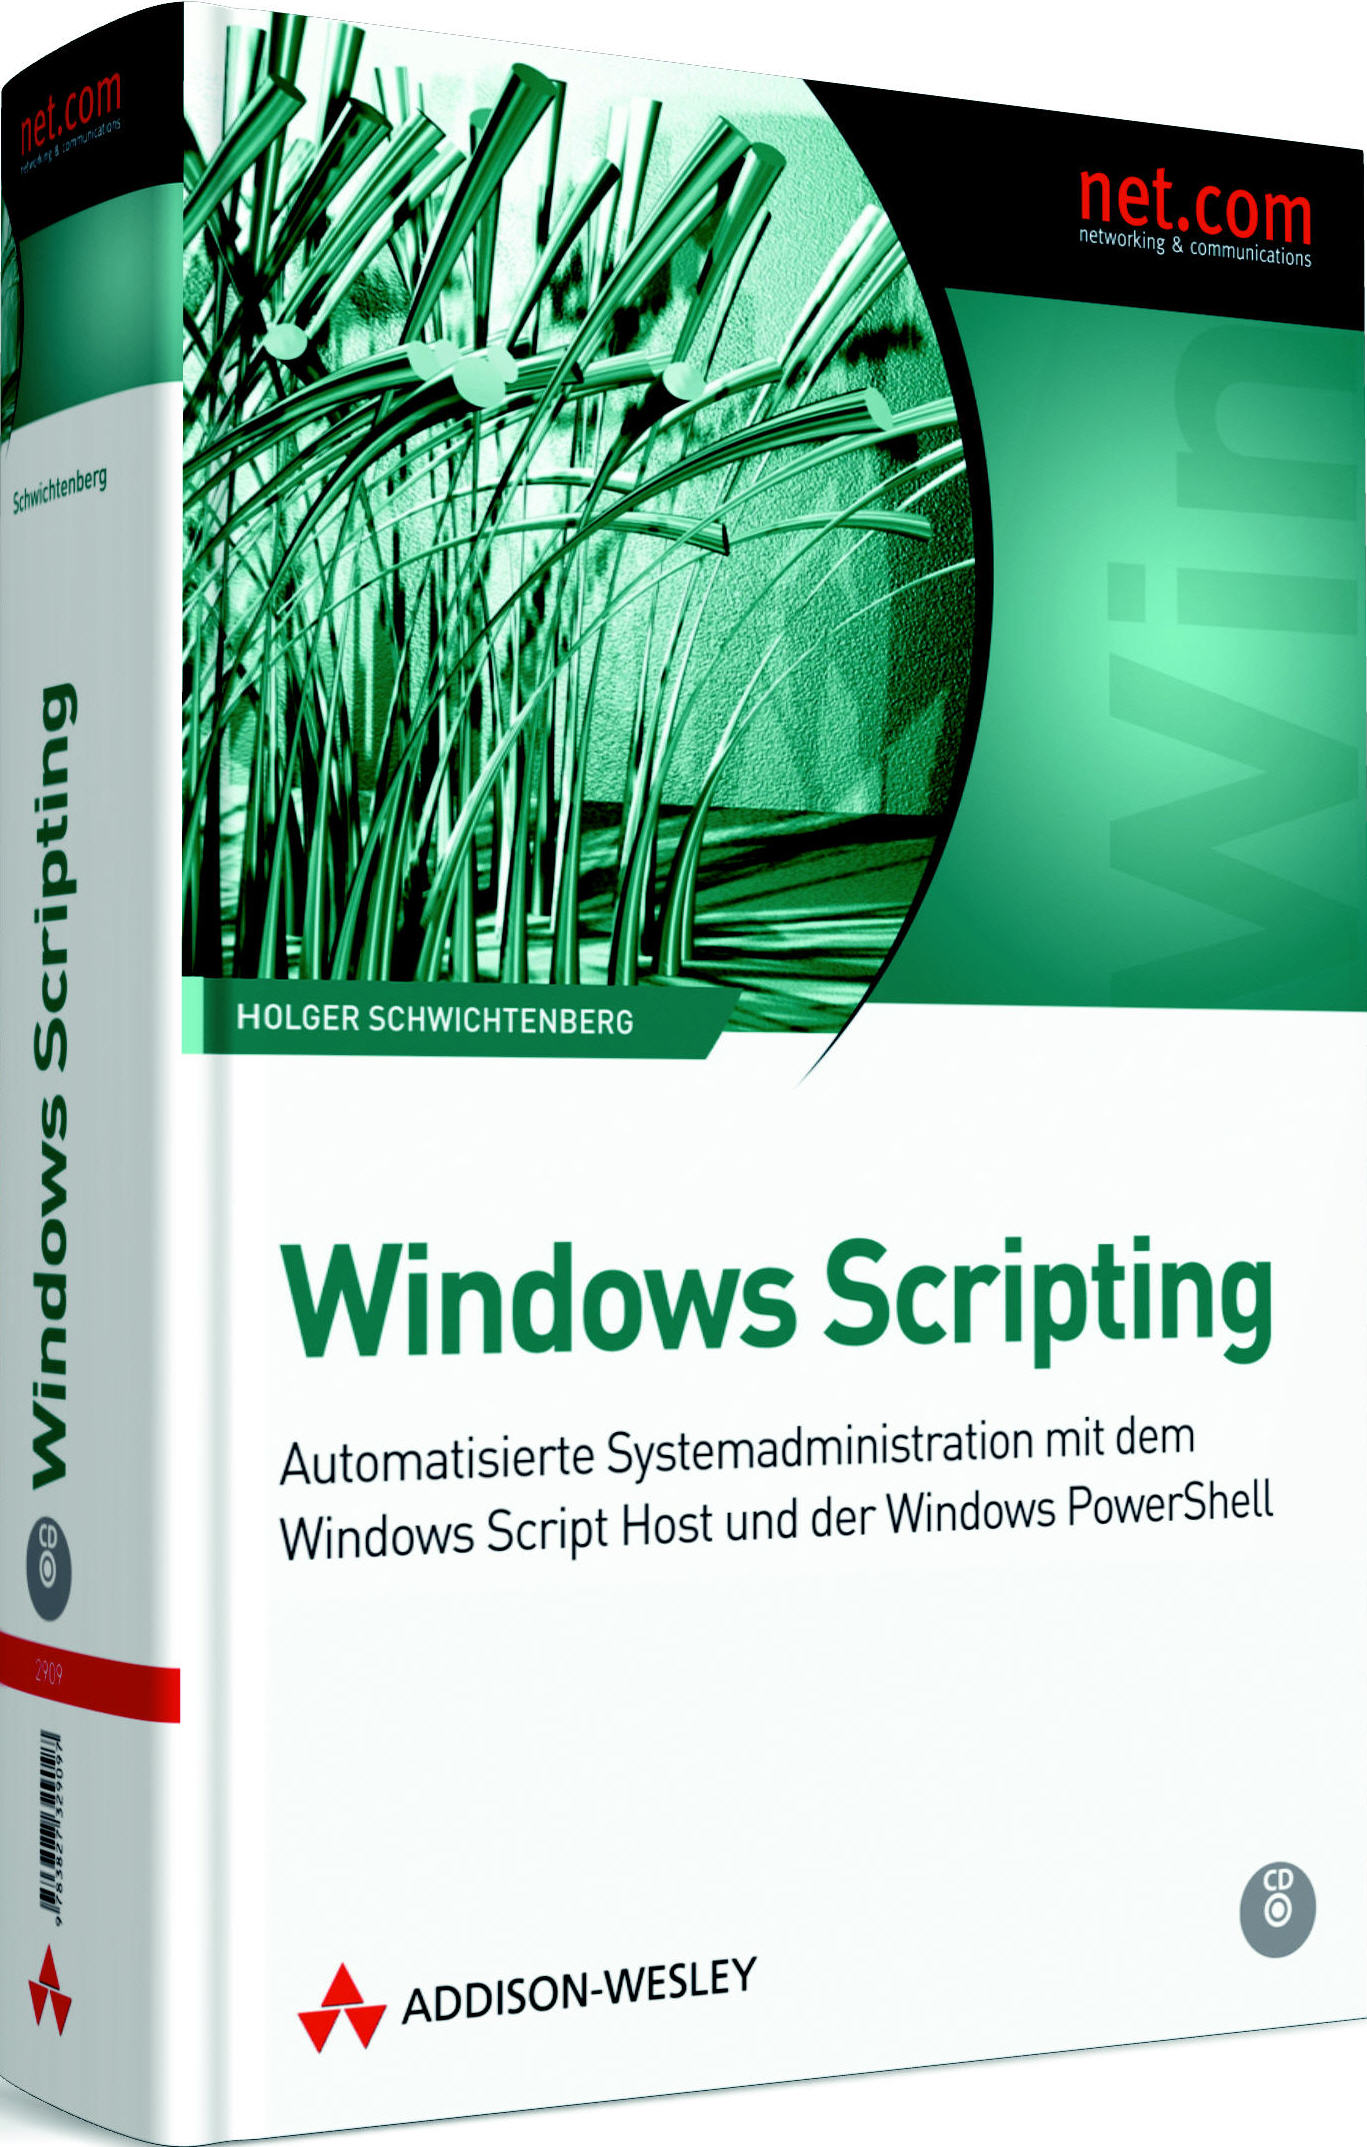 Windows Scripting (Addison-Wesley, 2009)